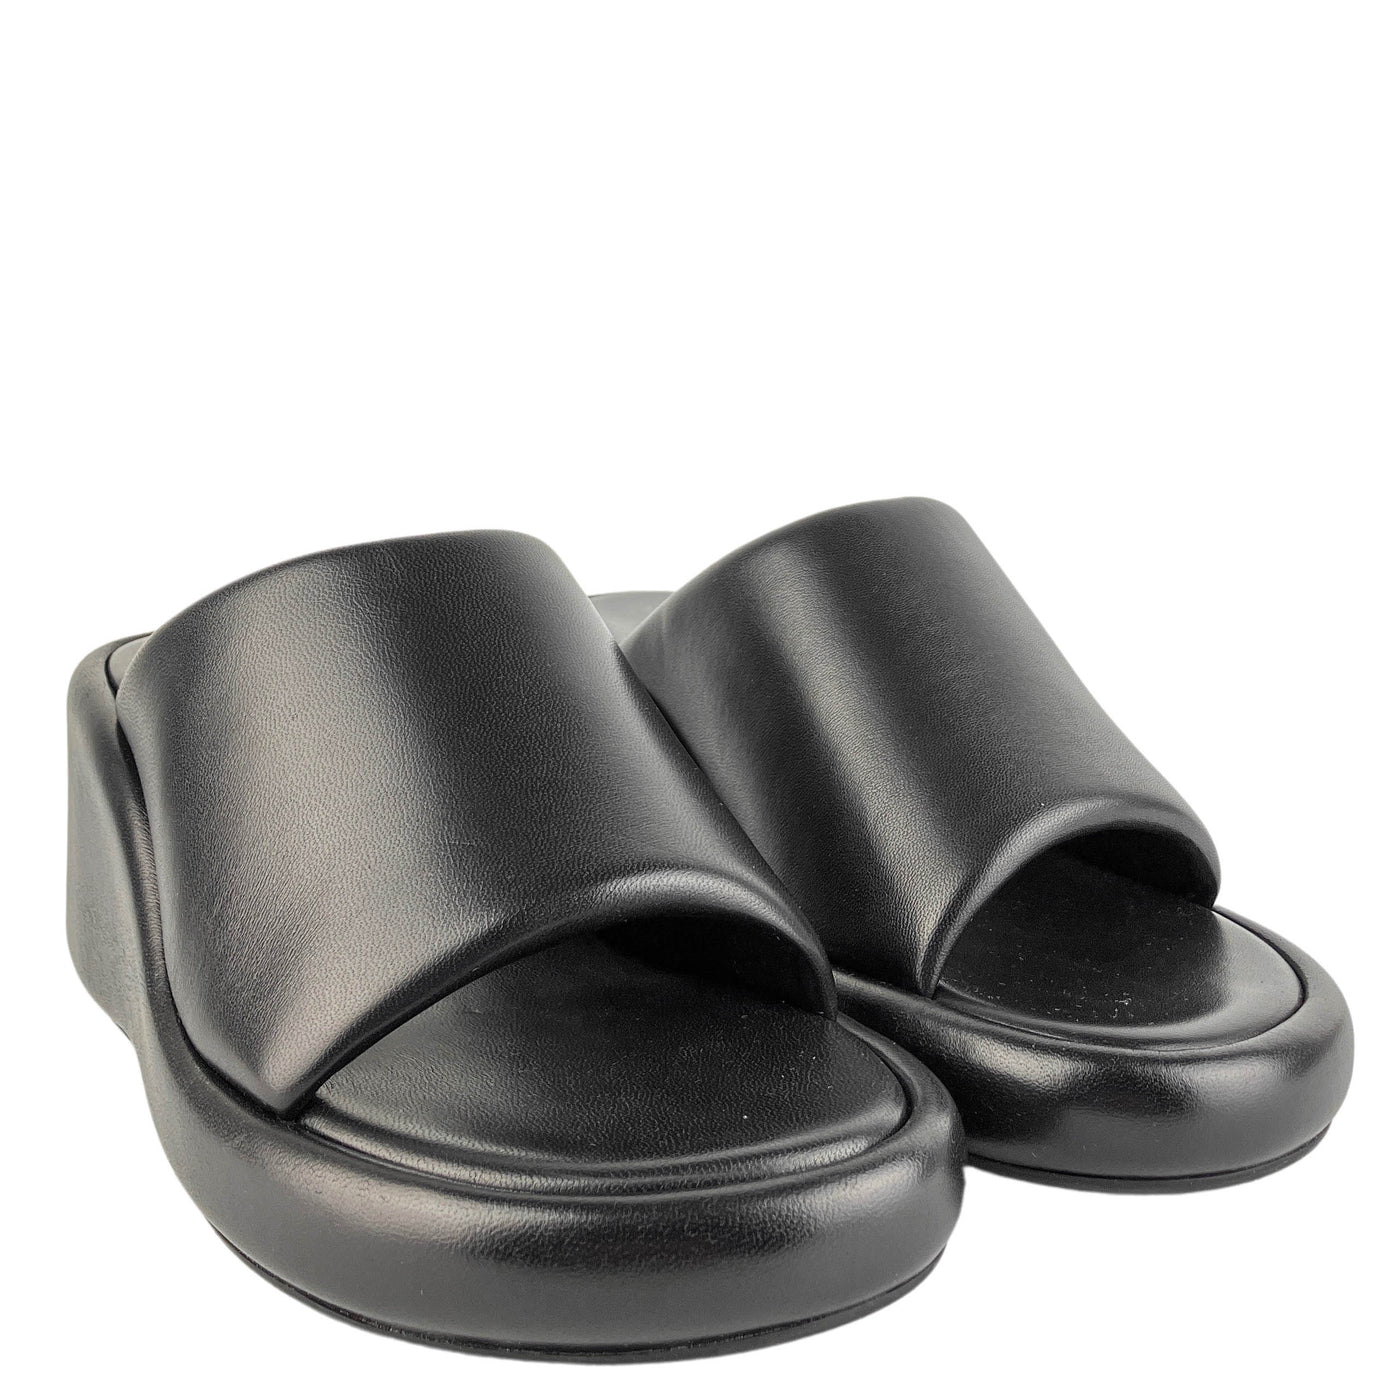 Balenciaga Rise Wedge Leather Sandals - Discounts on Balenciaga at UAL